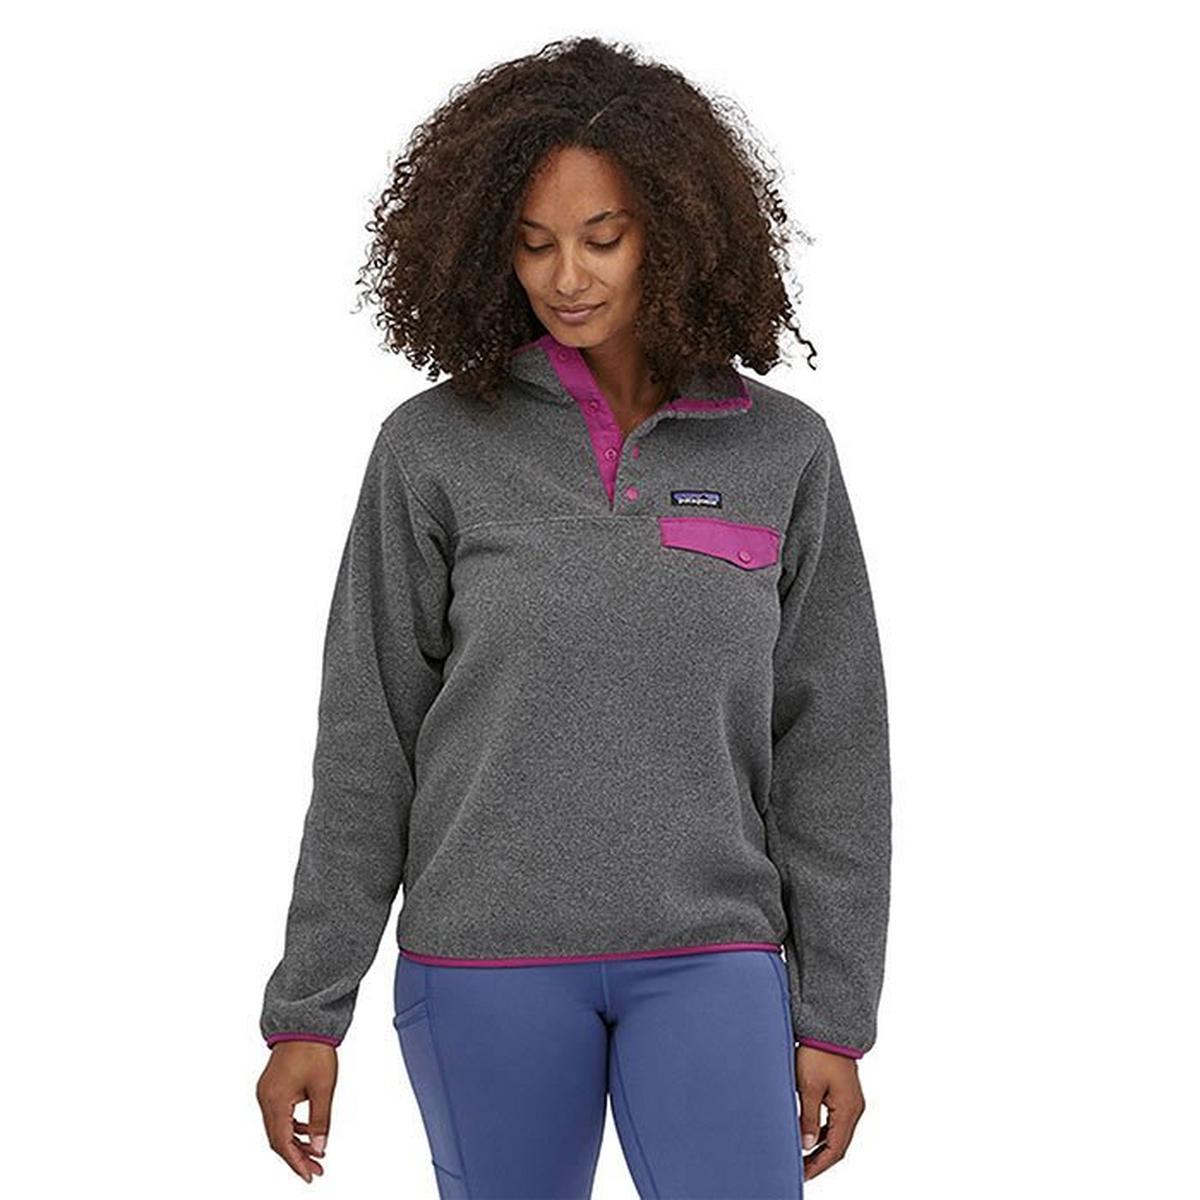 Women's Lightweight Synchilla® Snap-T® Fleece Pullover Top